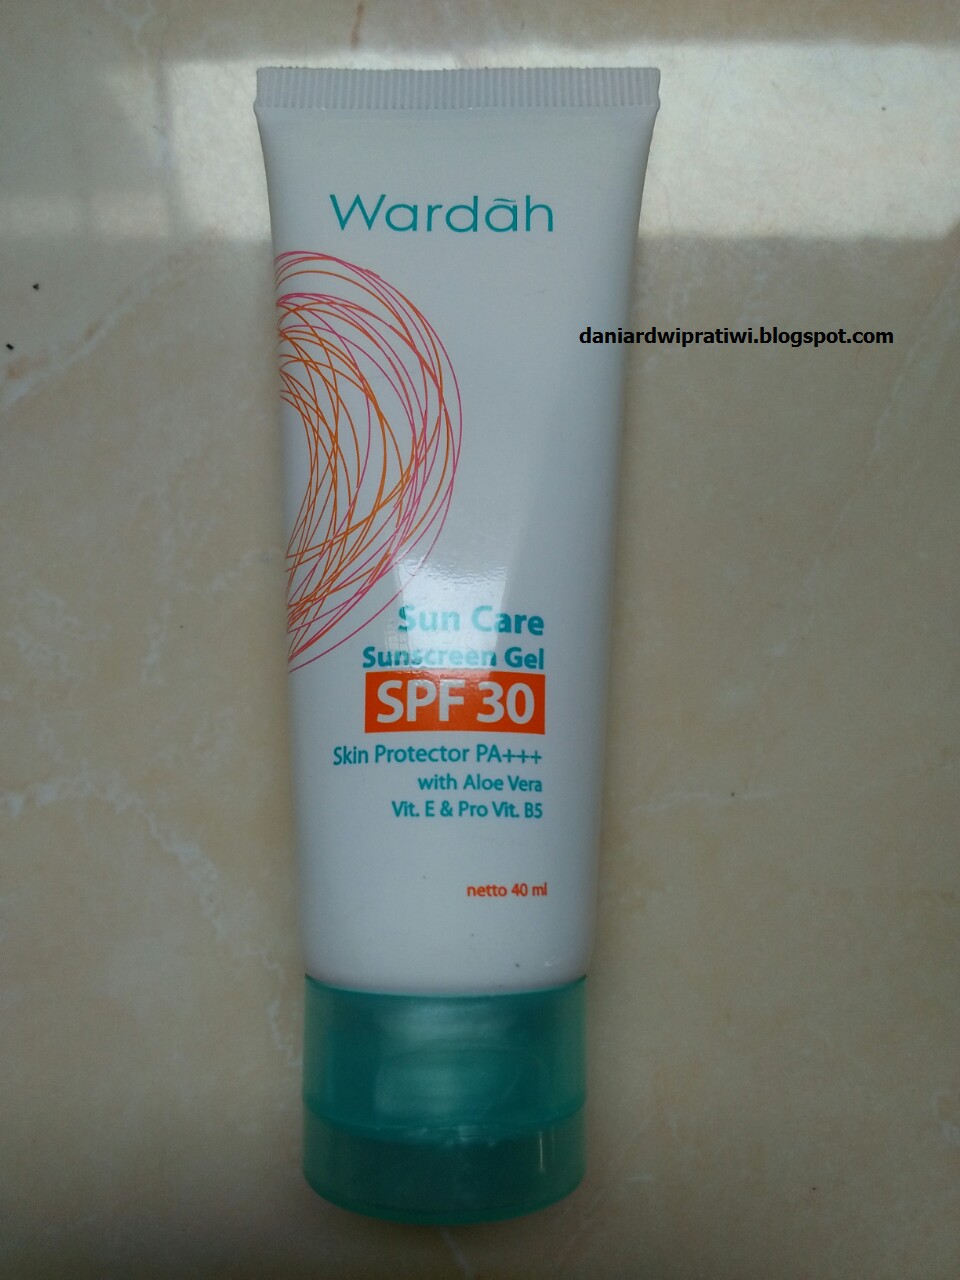 Daniar S Coming Review Wardah Sun Care Sunscreen Gel Spf 30 Pa